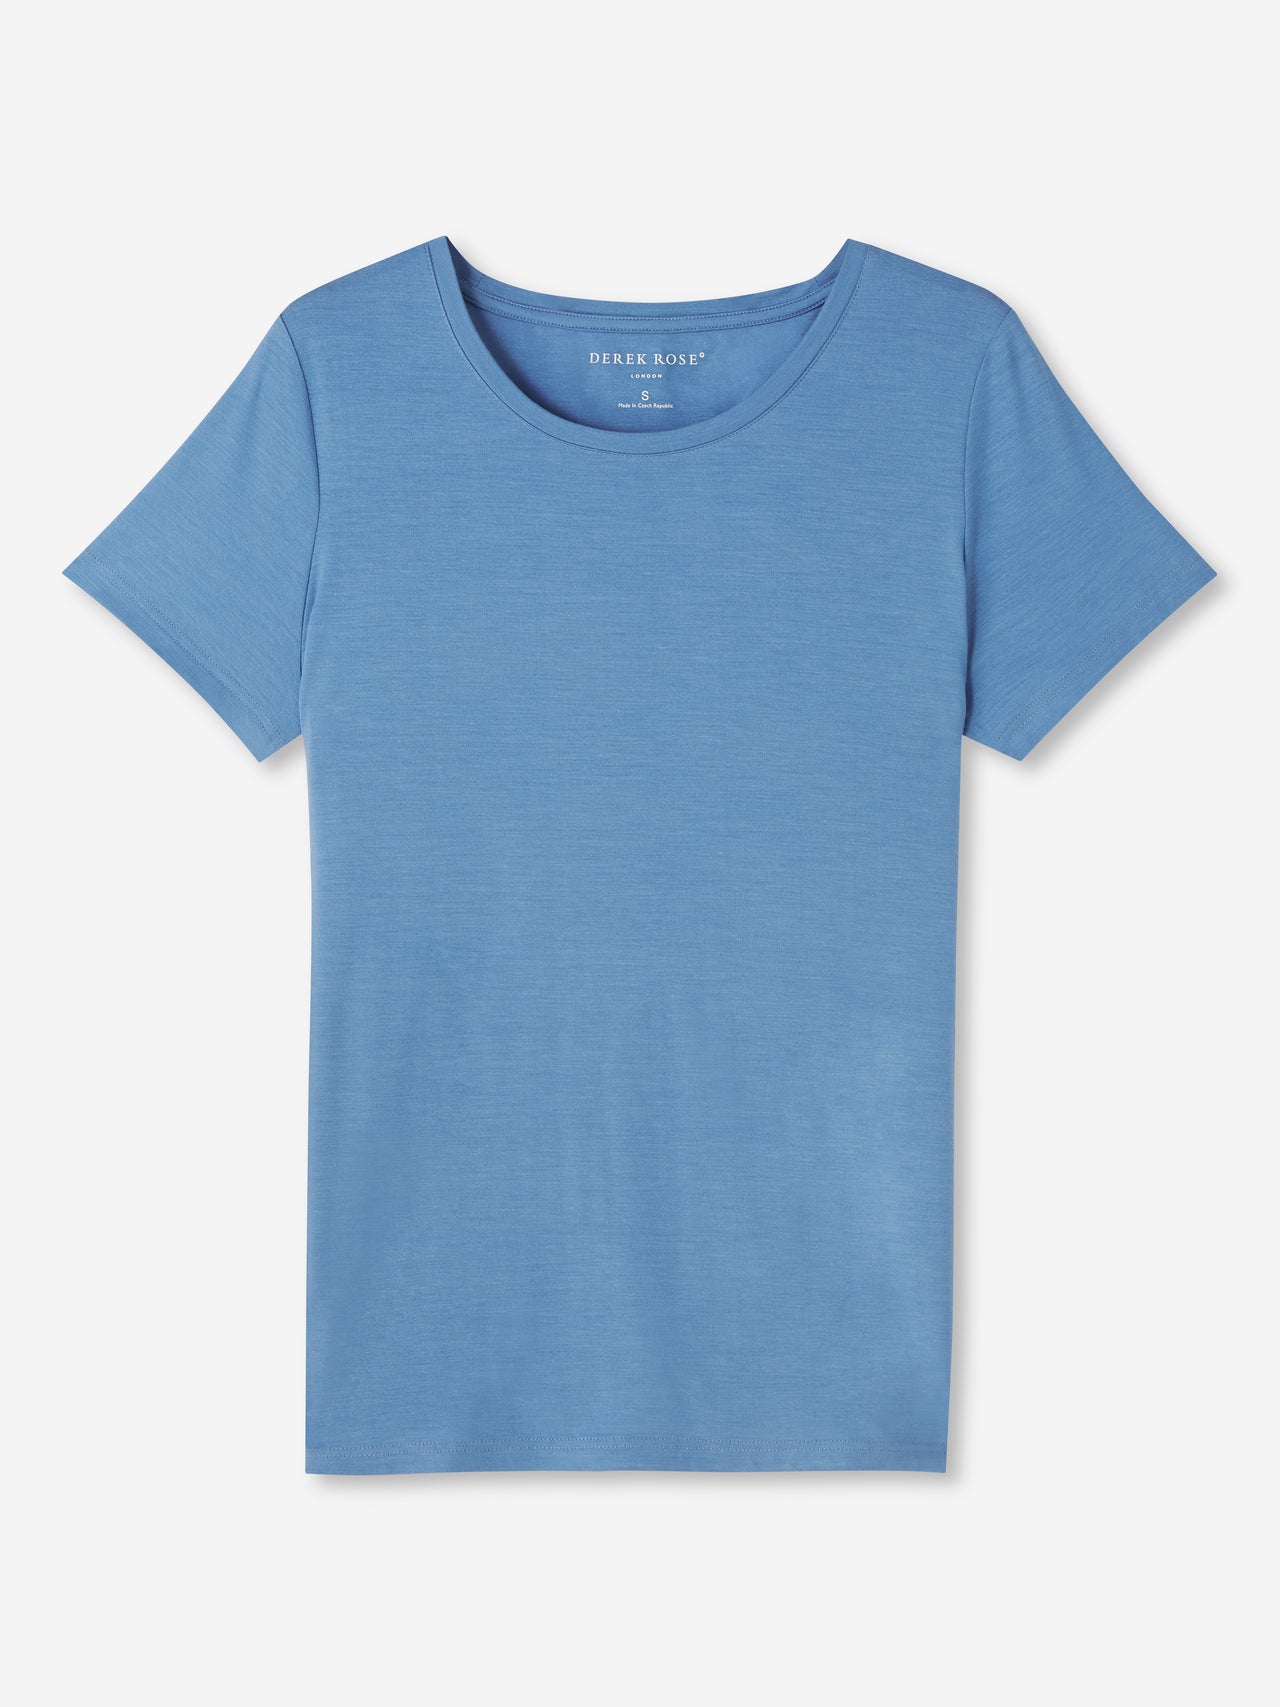 DEREK ROSE Lara Micro Modal Stretch Women's T-Shirt - BLUE